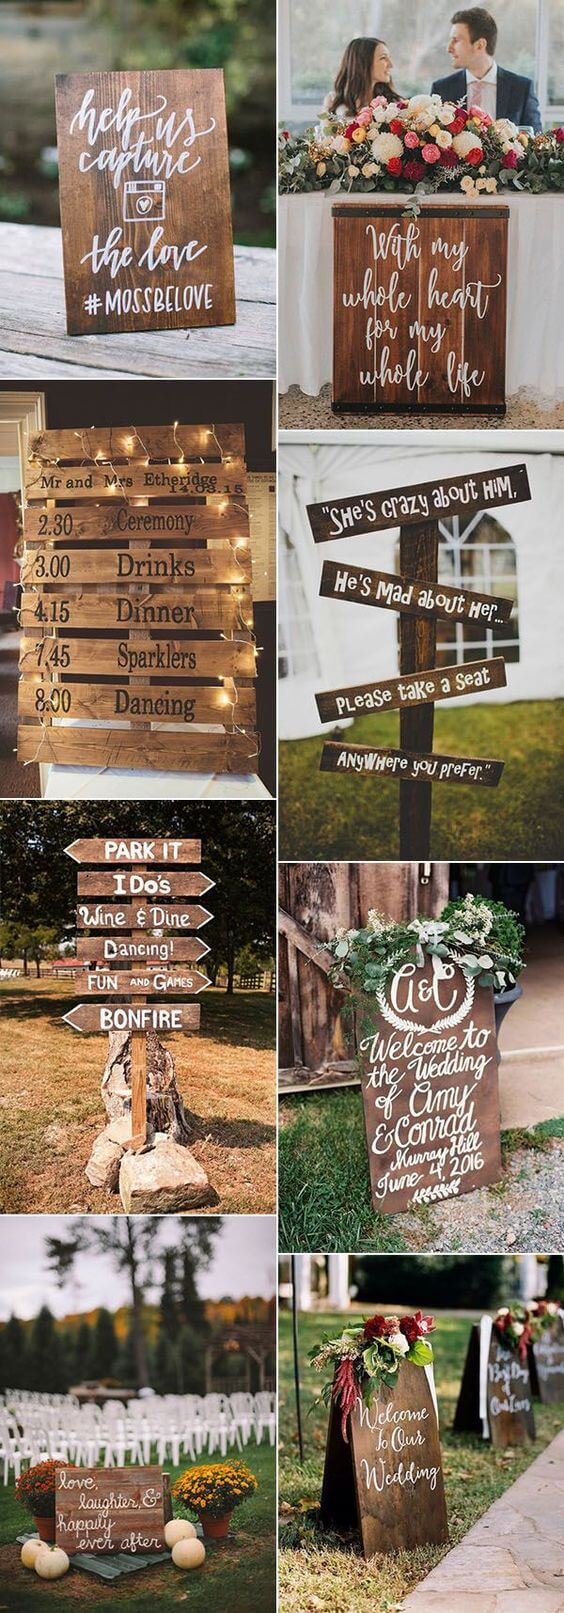 Welcome sign ideas for wedding | Creative & Rustic Backyard Wedding Ideas For Summer & Fall